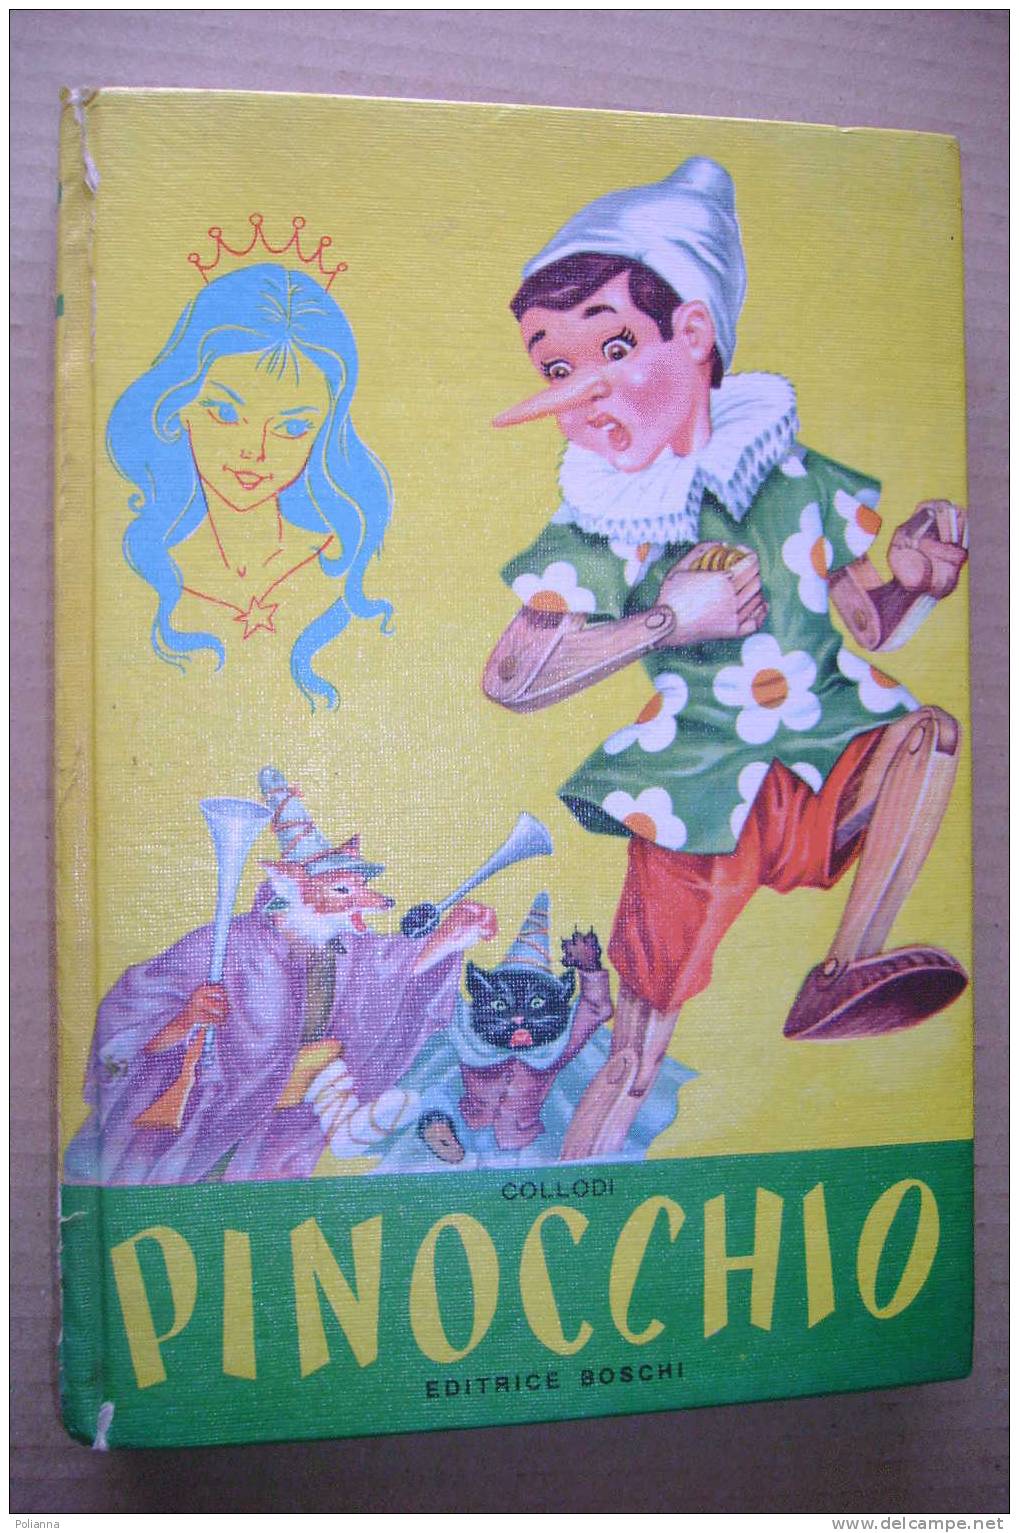 PDF/41 Collodi PINOCCHIO Ed.Boschi 1962/illustr.G.Moroni Celsi - Old